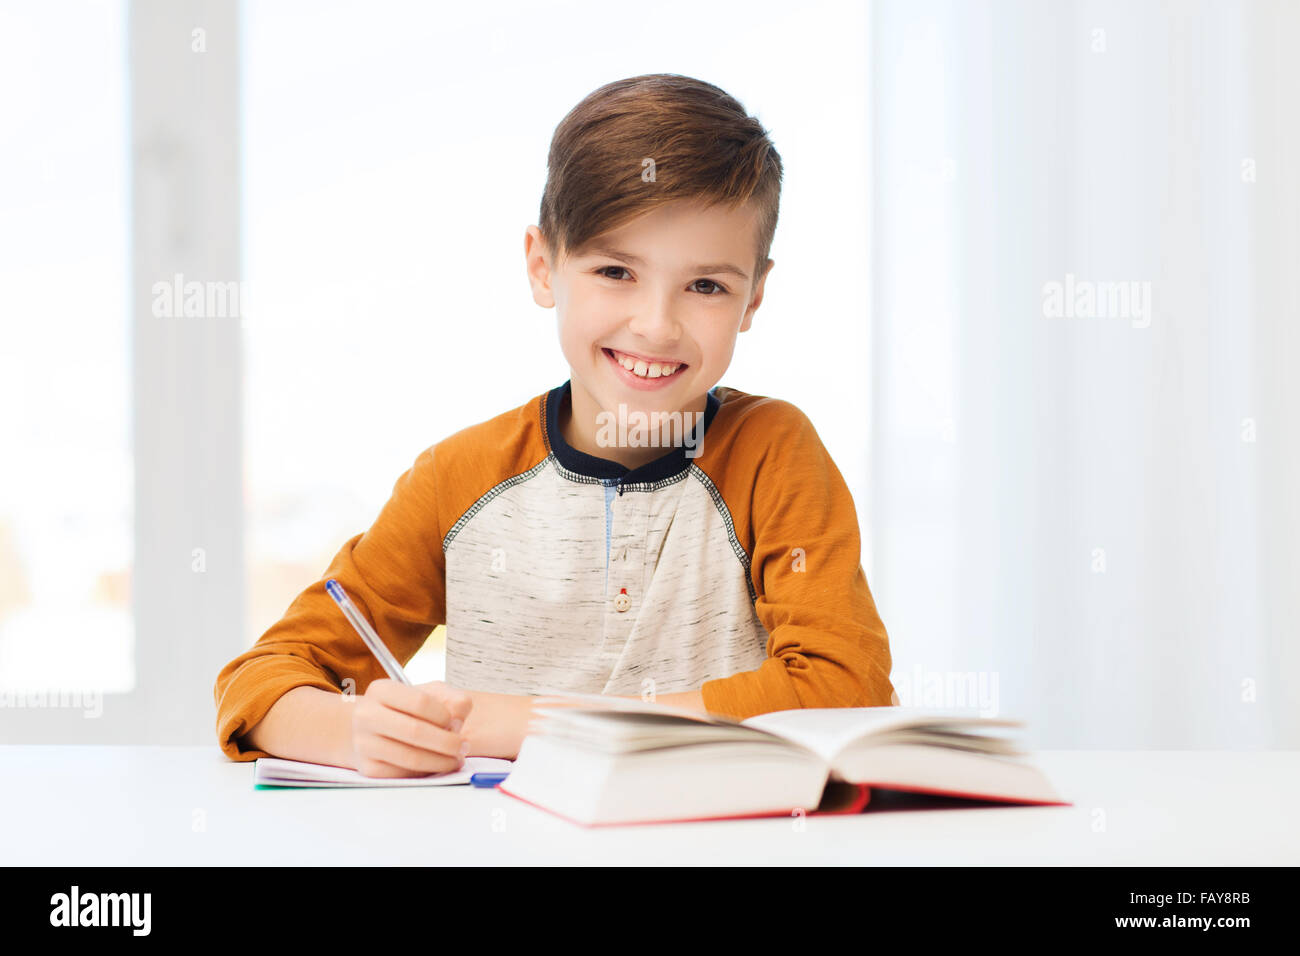 Smiling Teenage Boy Sunglasses Taking Notes Looking Away While Studying  Stock Photo by ©ArturVerkhovetskiy 203552762